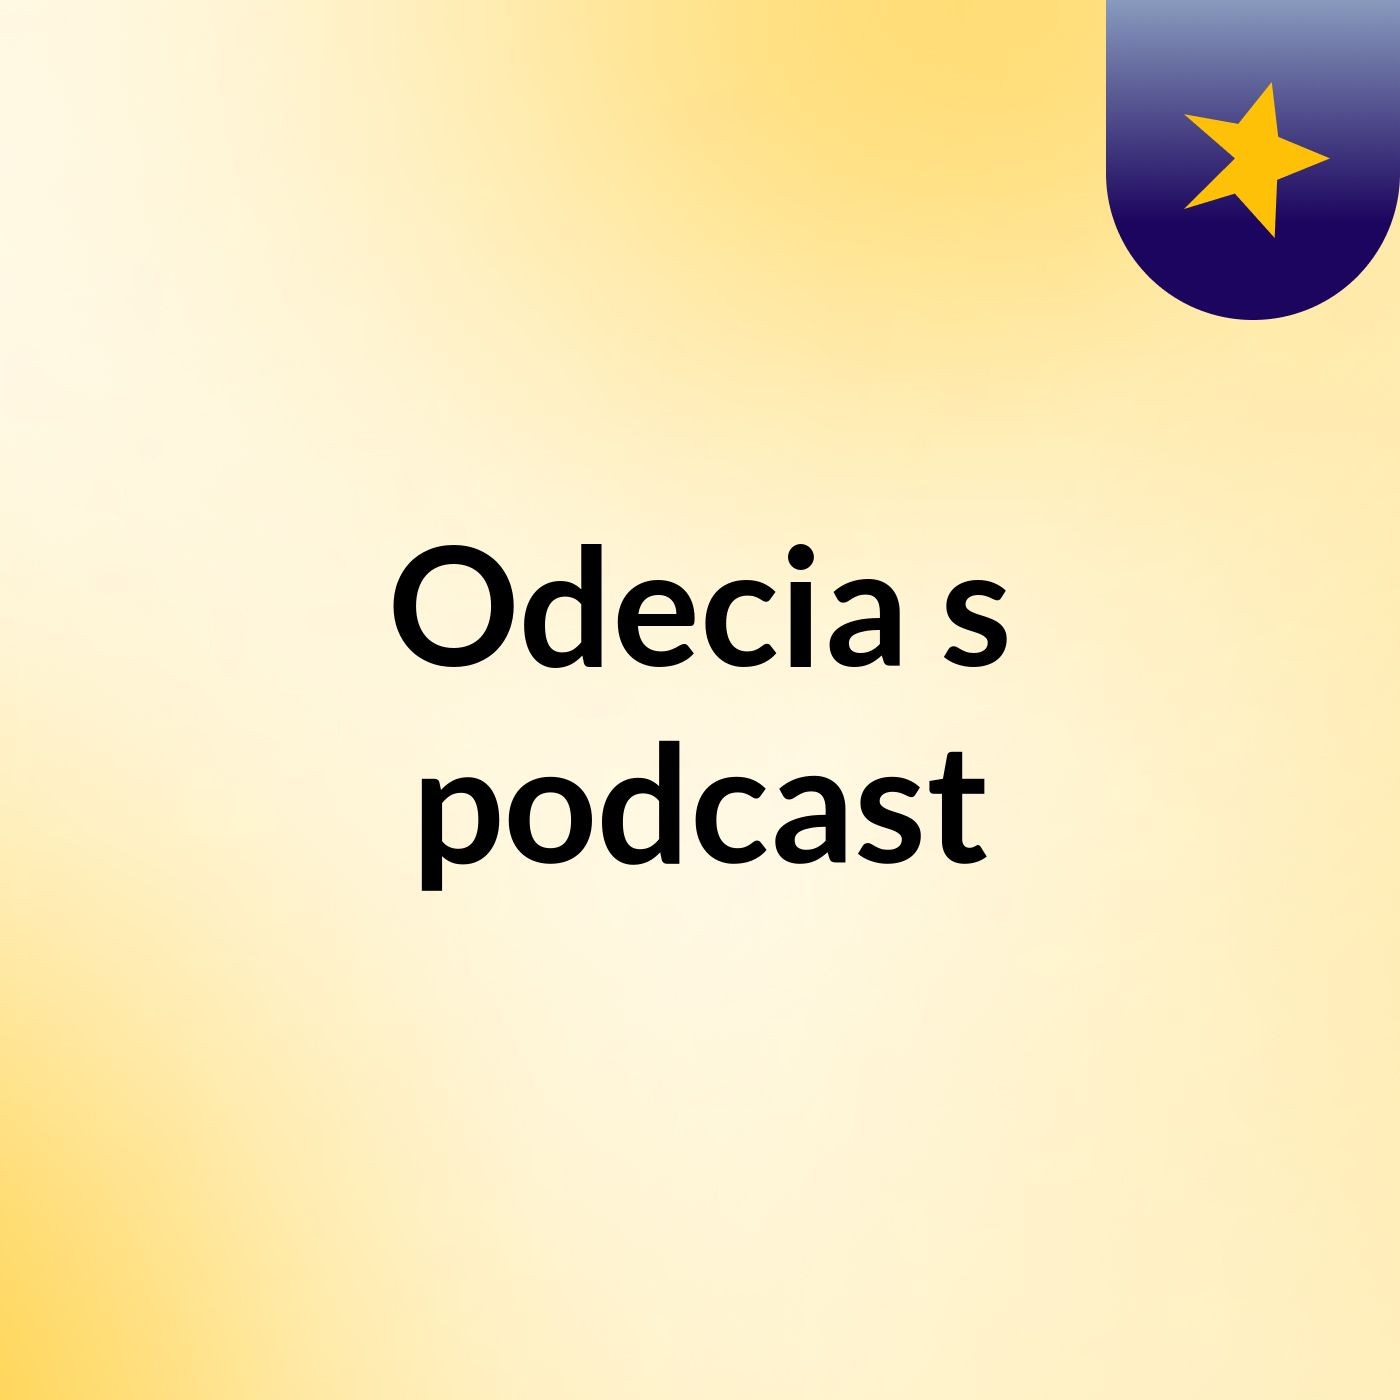 Episode 3 - Odecia's podcast